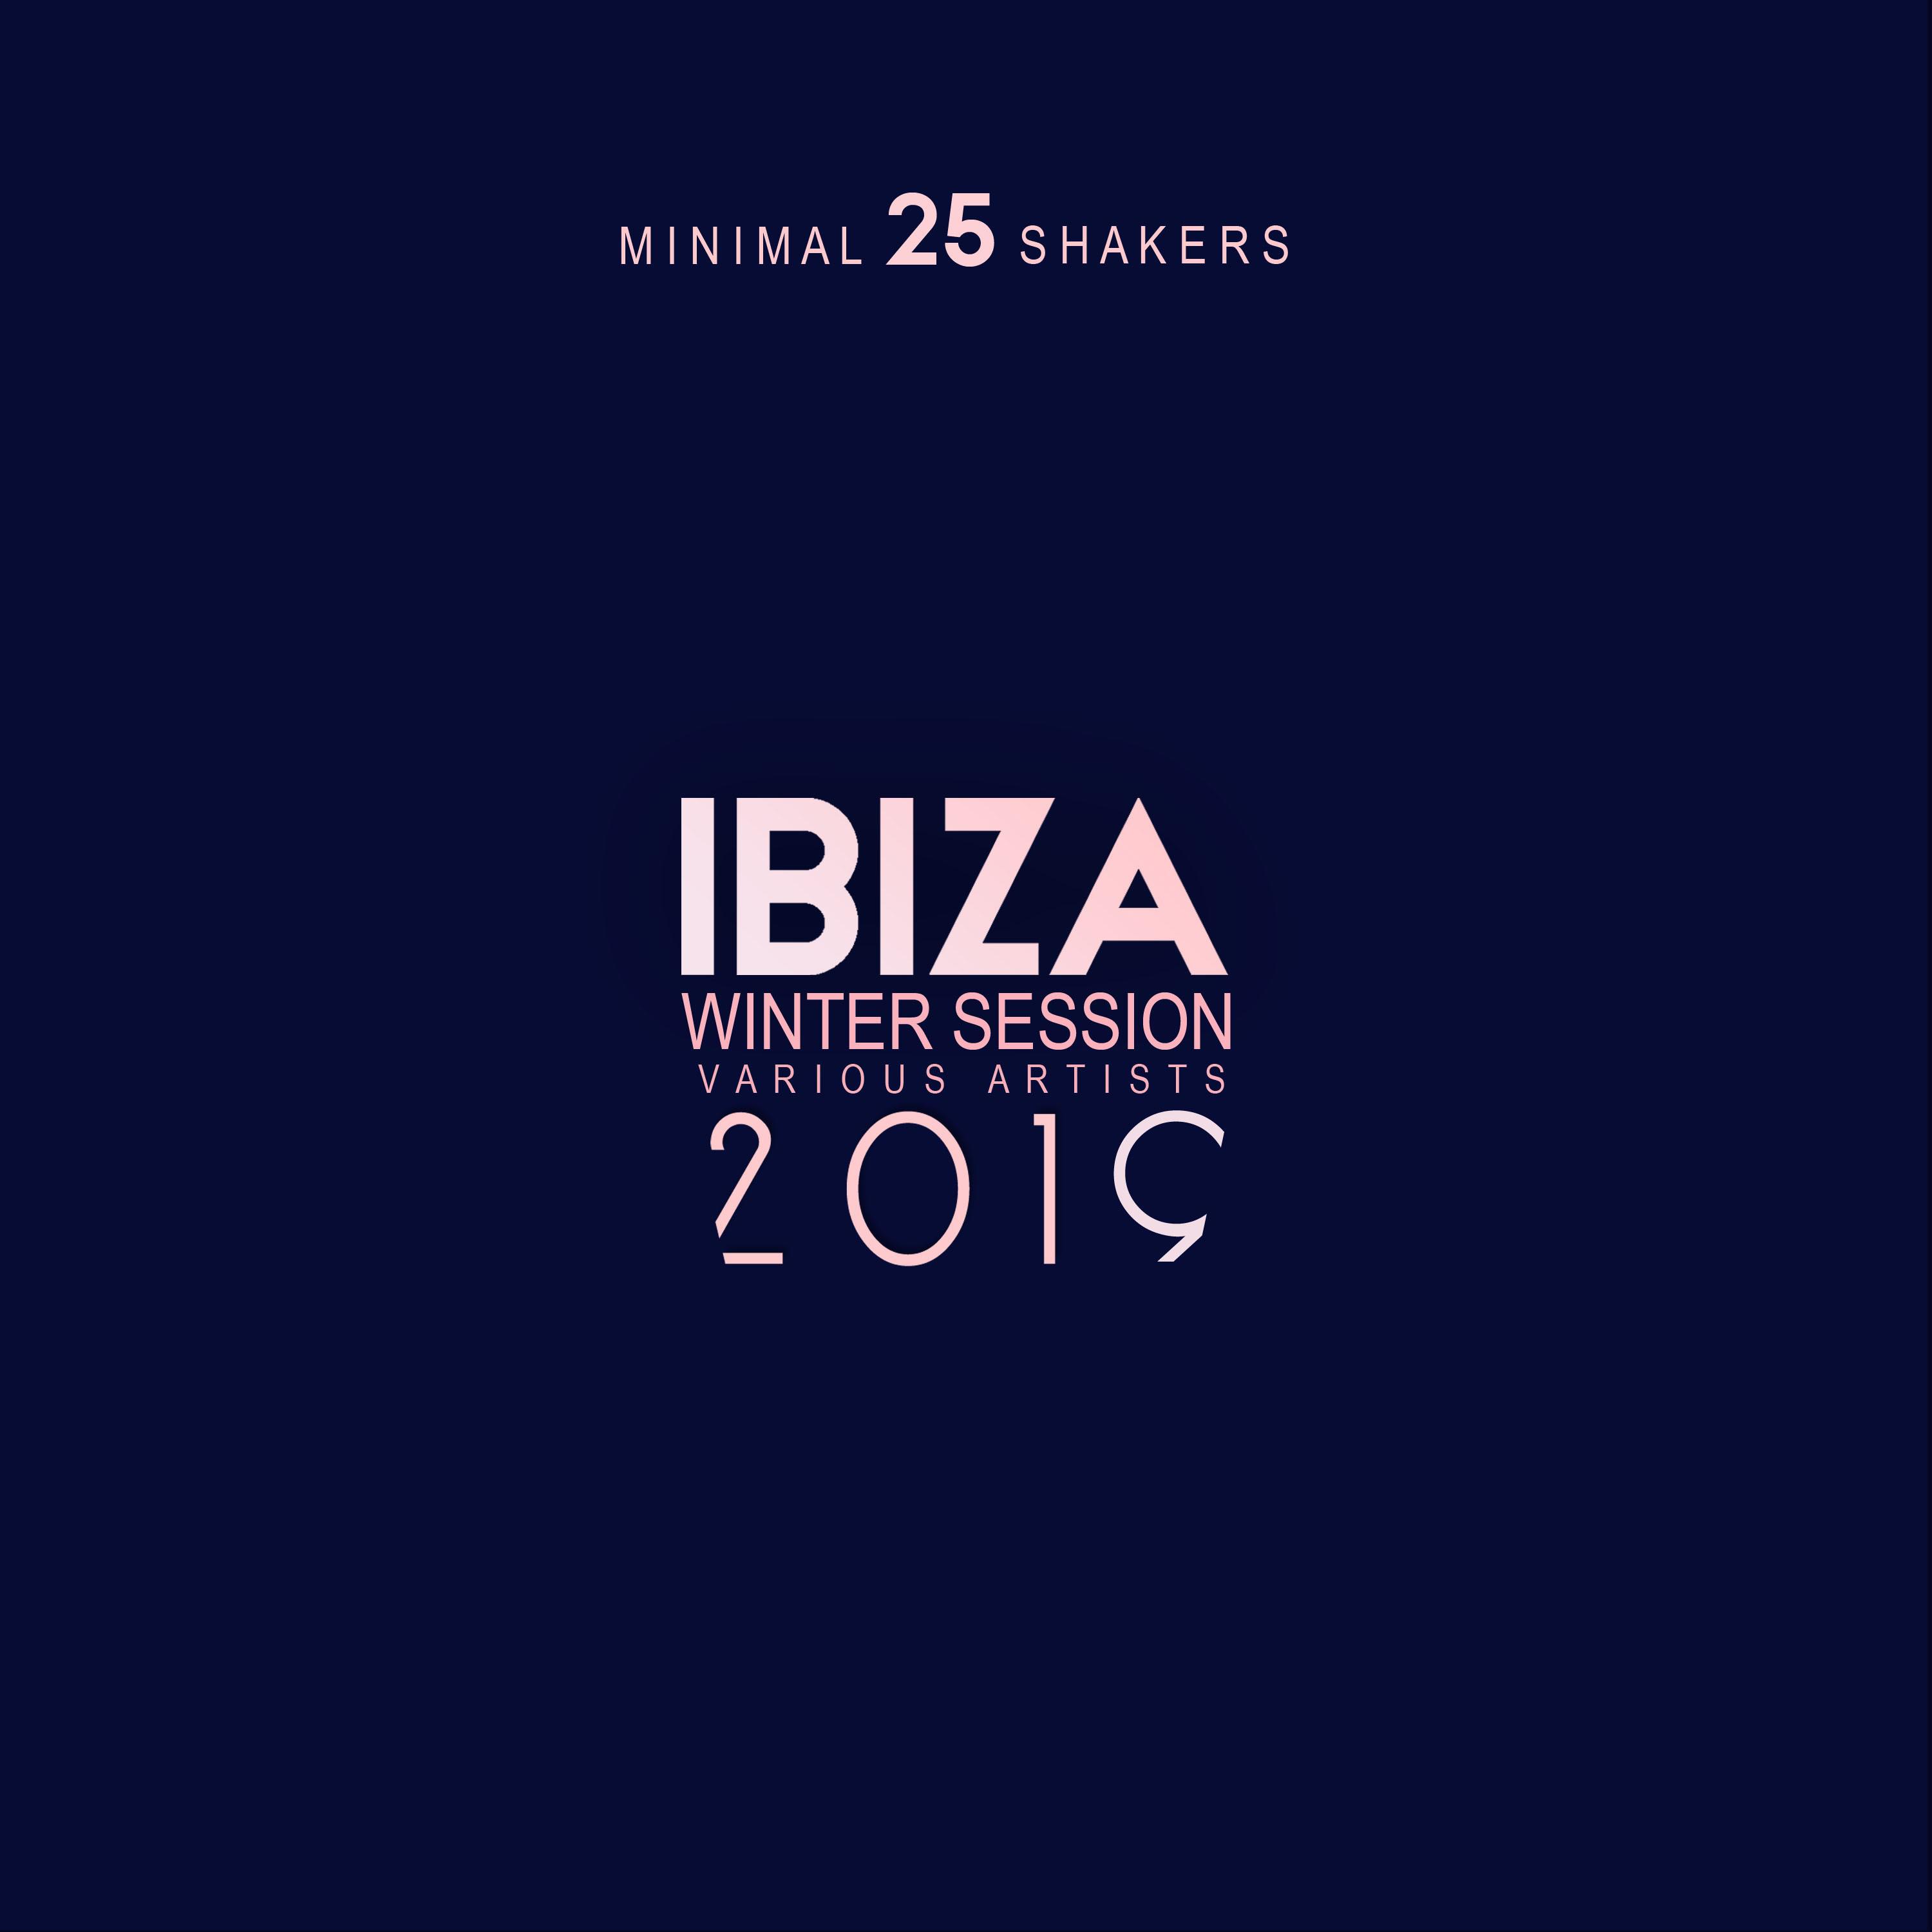 Ibiza Winter Session 2019 (25 Minimal Shakers)